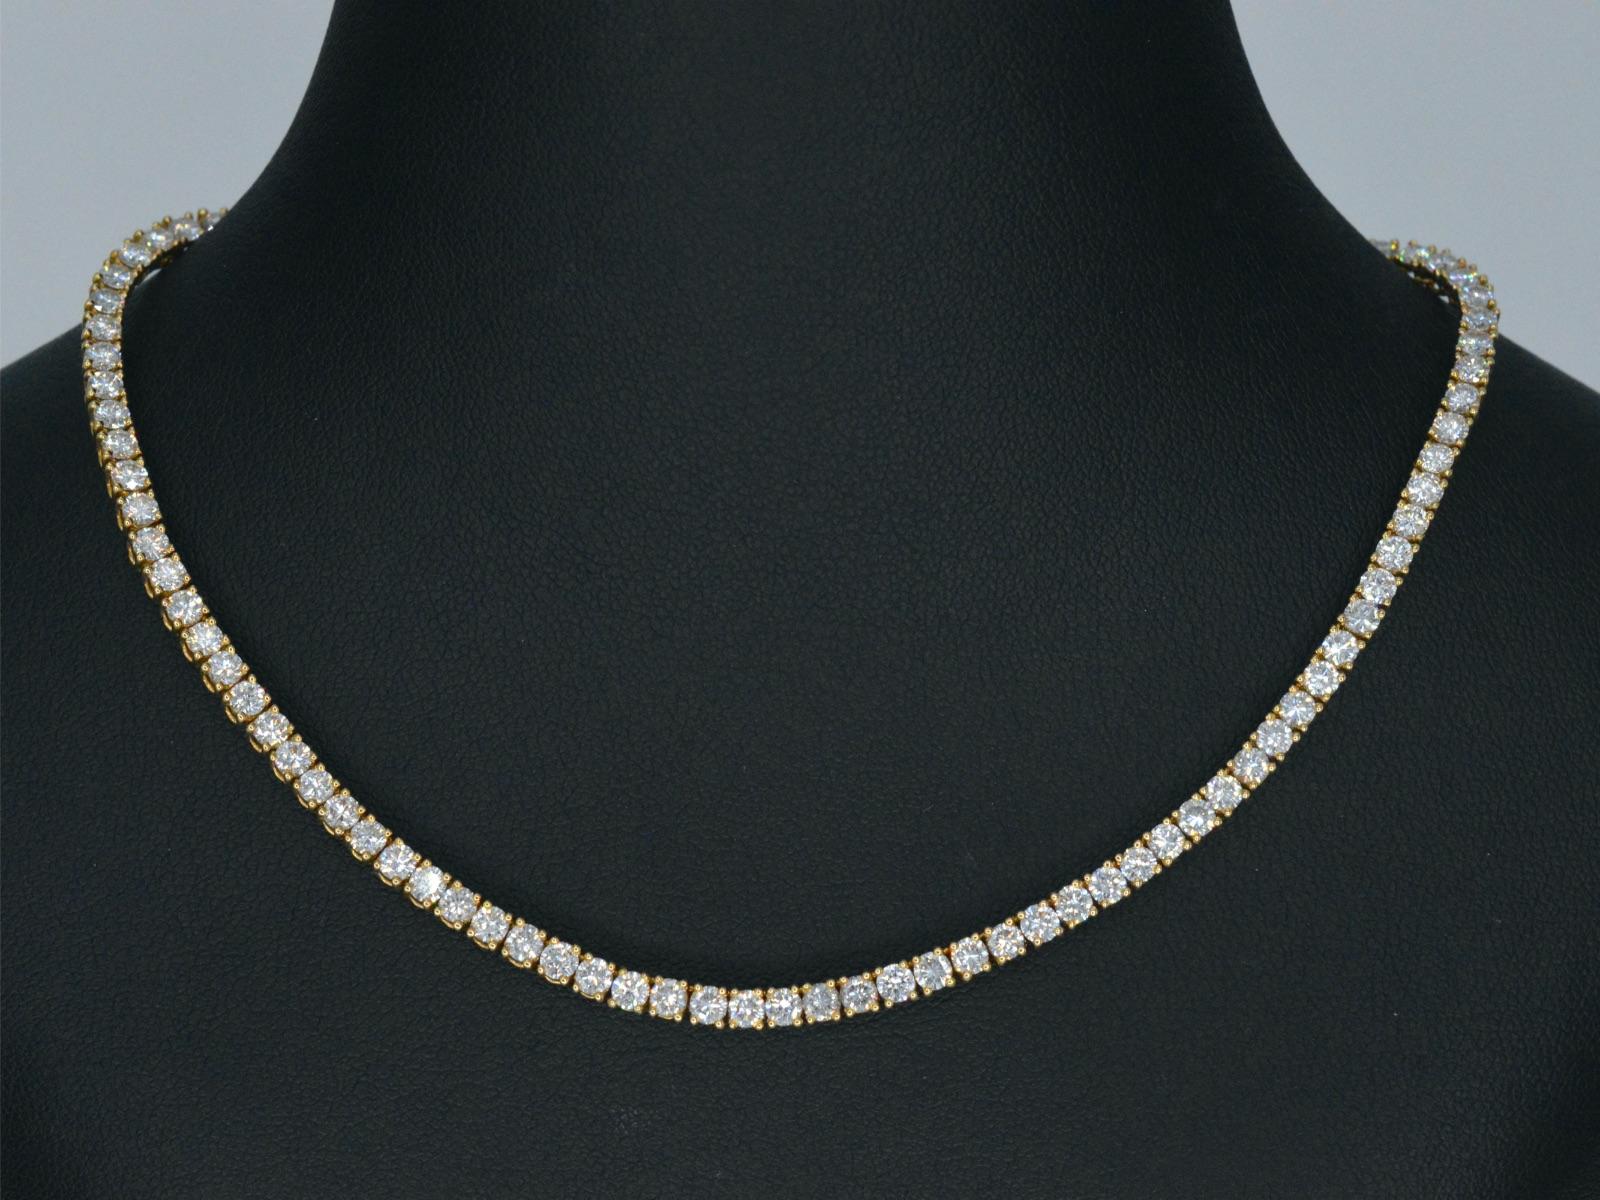 Women's or Men's Cartier Tennis-Collier Necklace with 8.88 Carat Diamonds